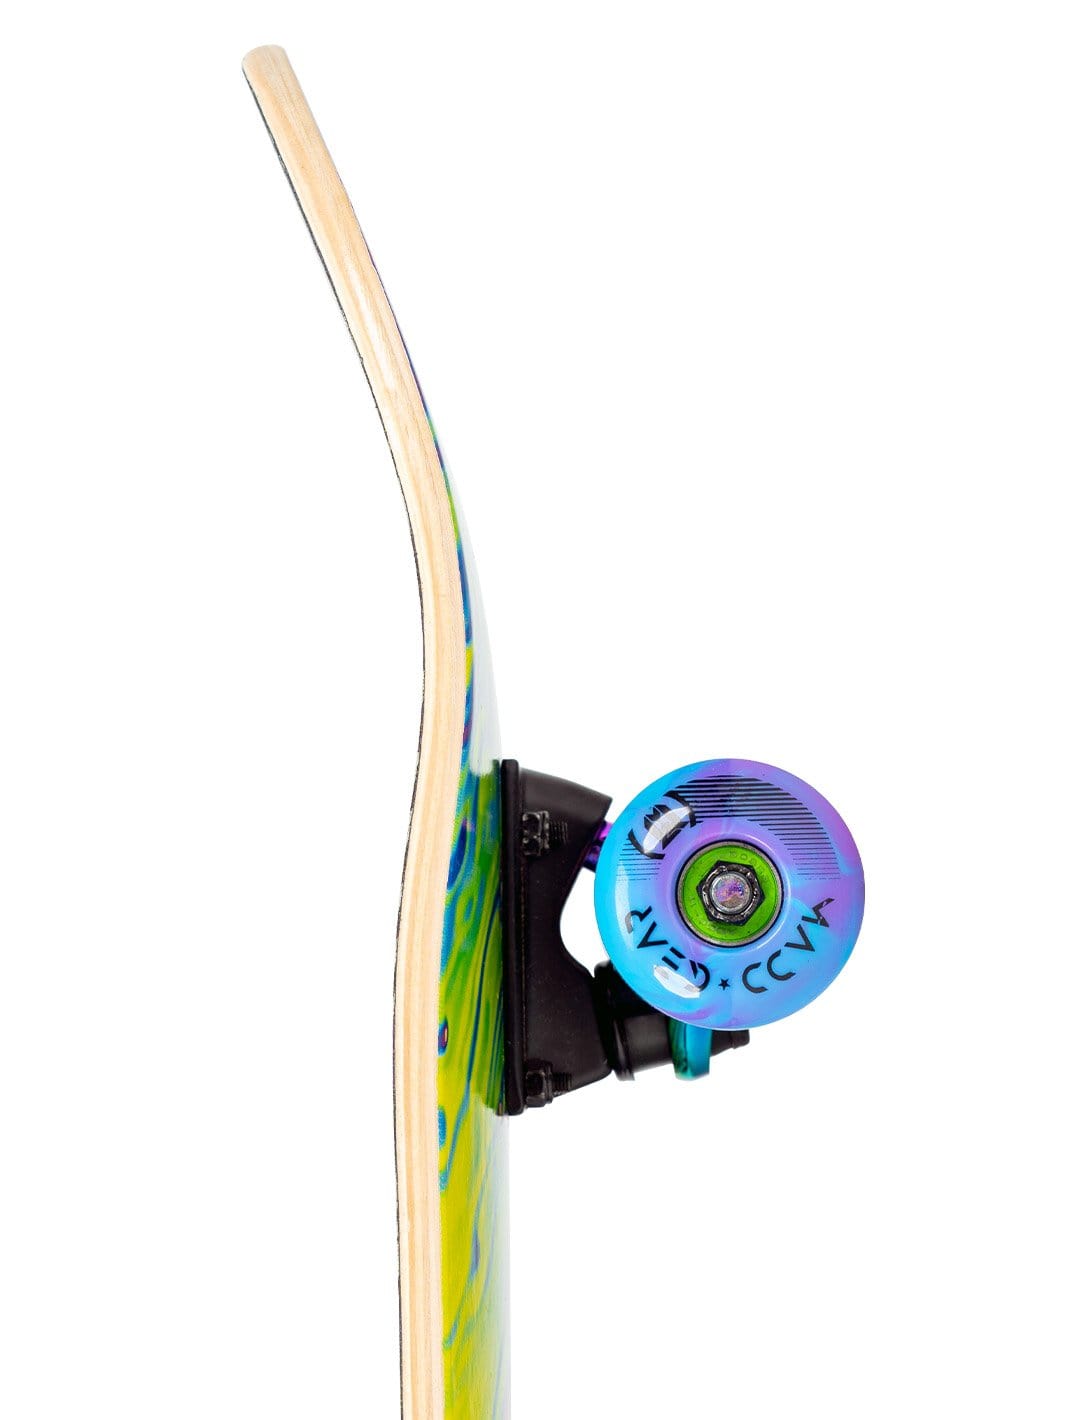 MGP Madd Gear Complete Skateboard Popsicle Skate Deck Holographic Complete Best Swirl Rainbow Wheels